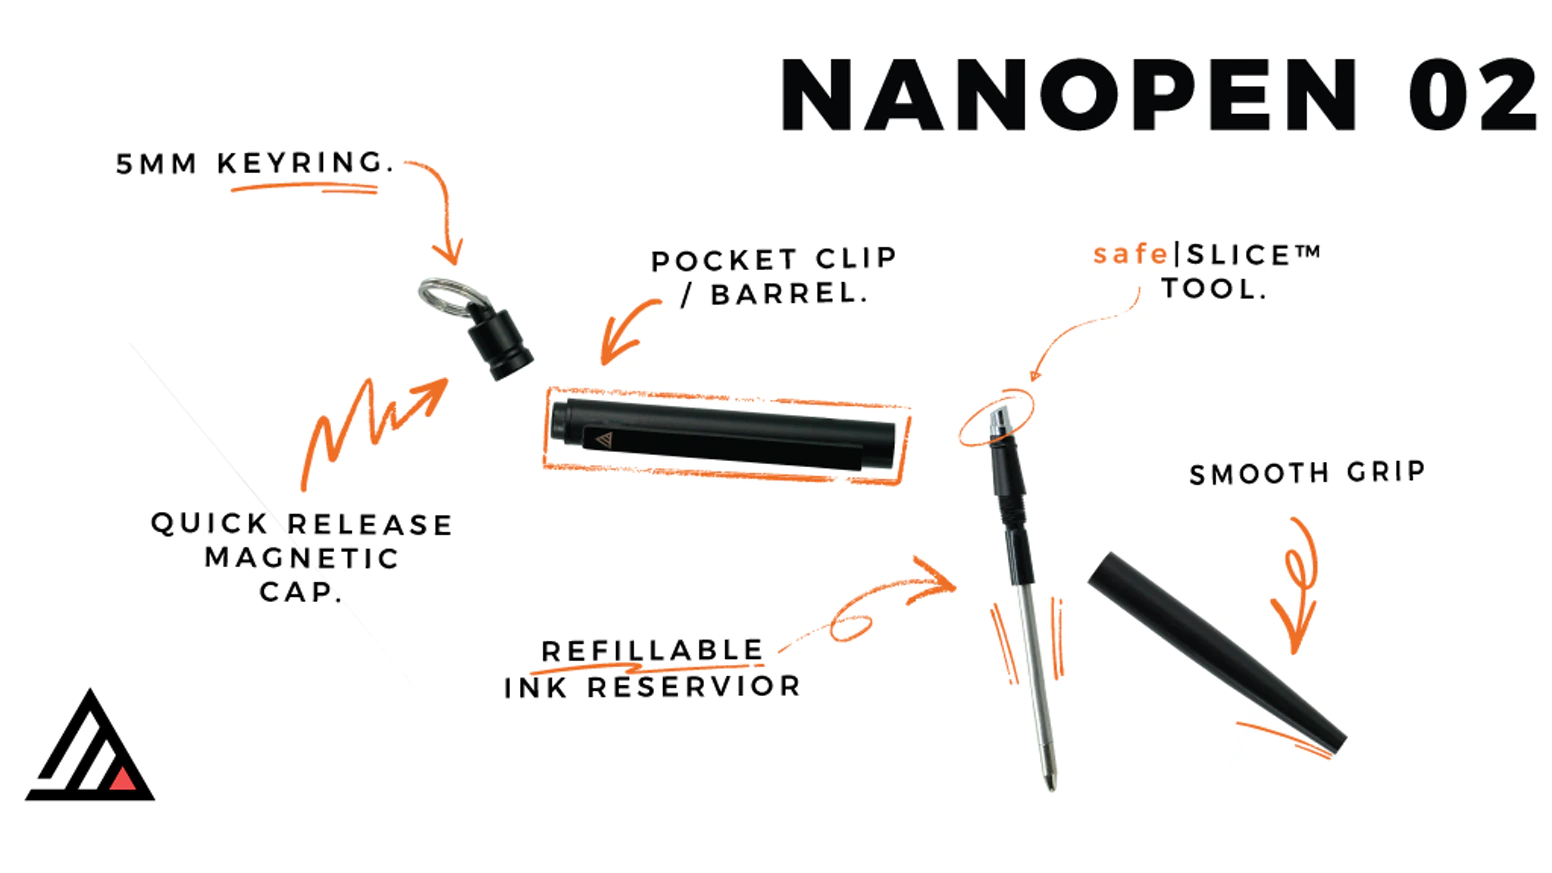 NanoPen 02 durable mini EDC pen